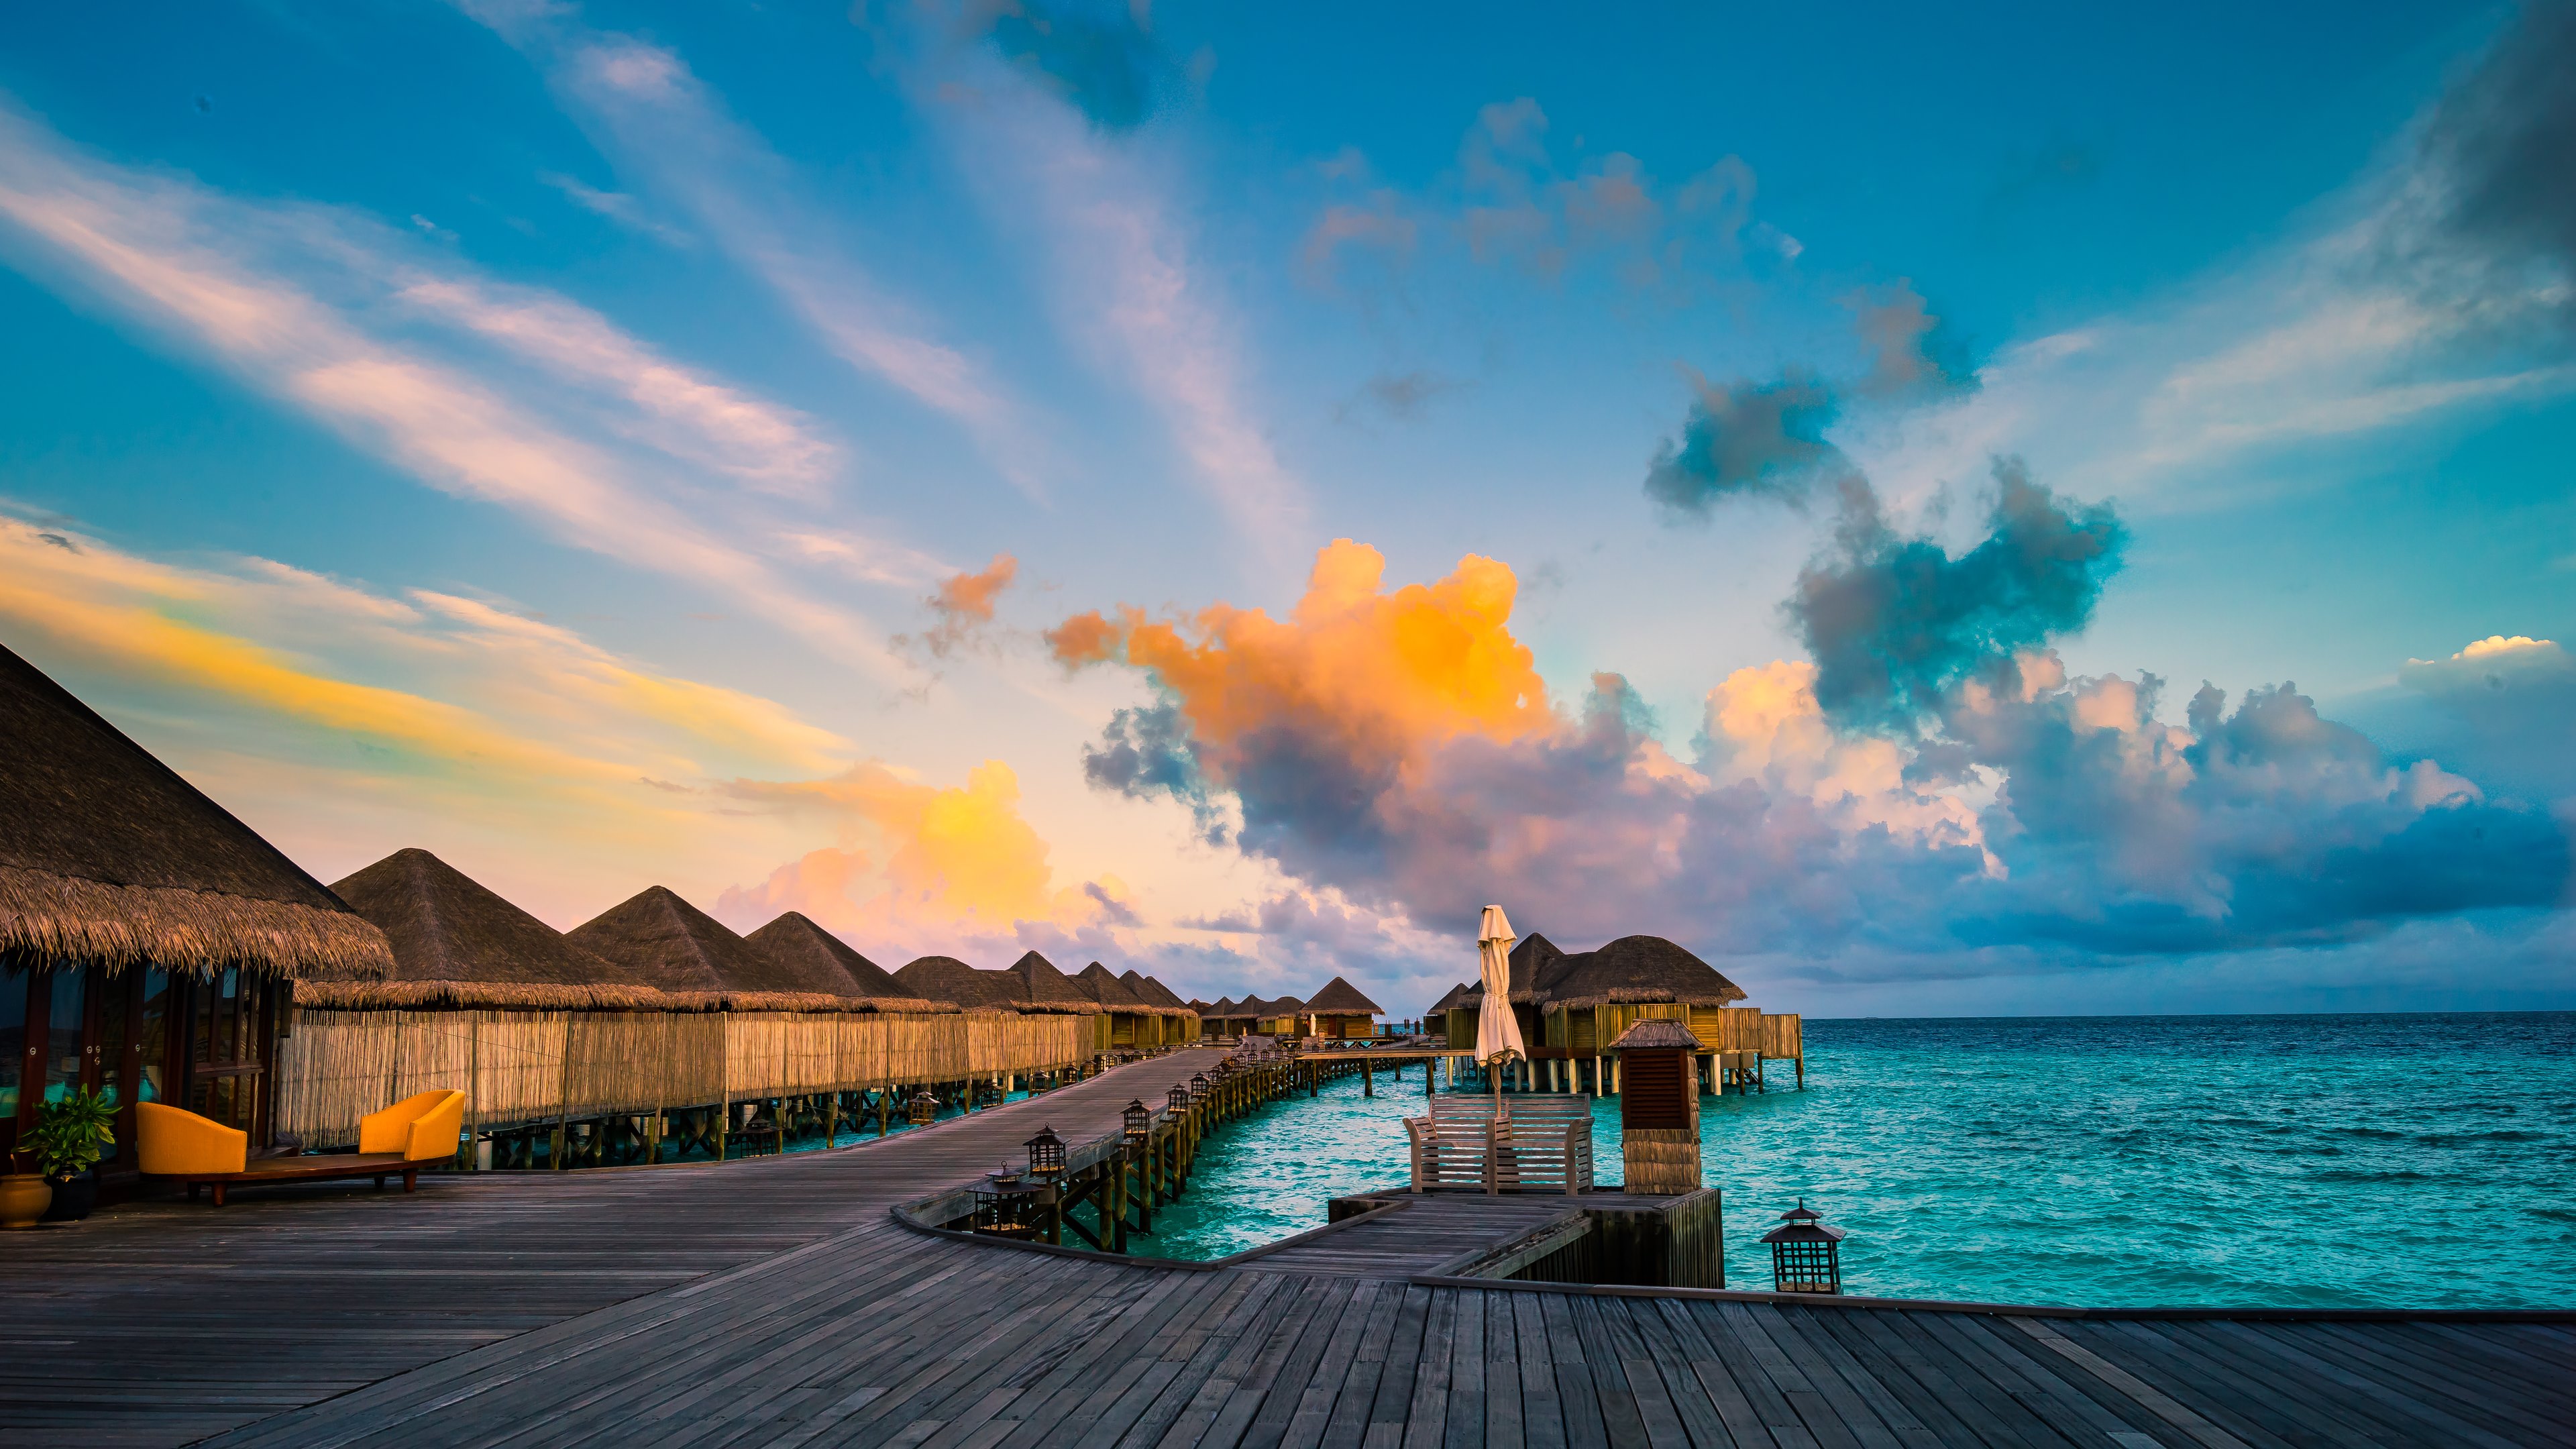 Bungalow Cloud Maldives Ocean Resort 3840x2160